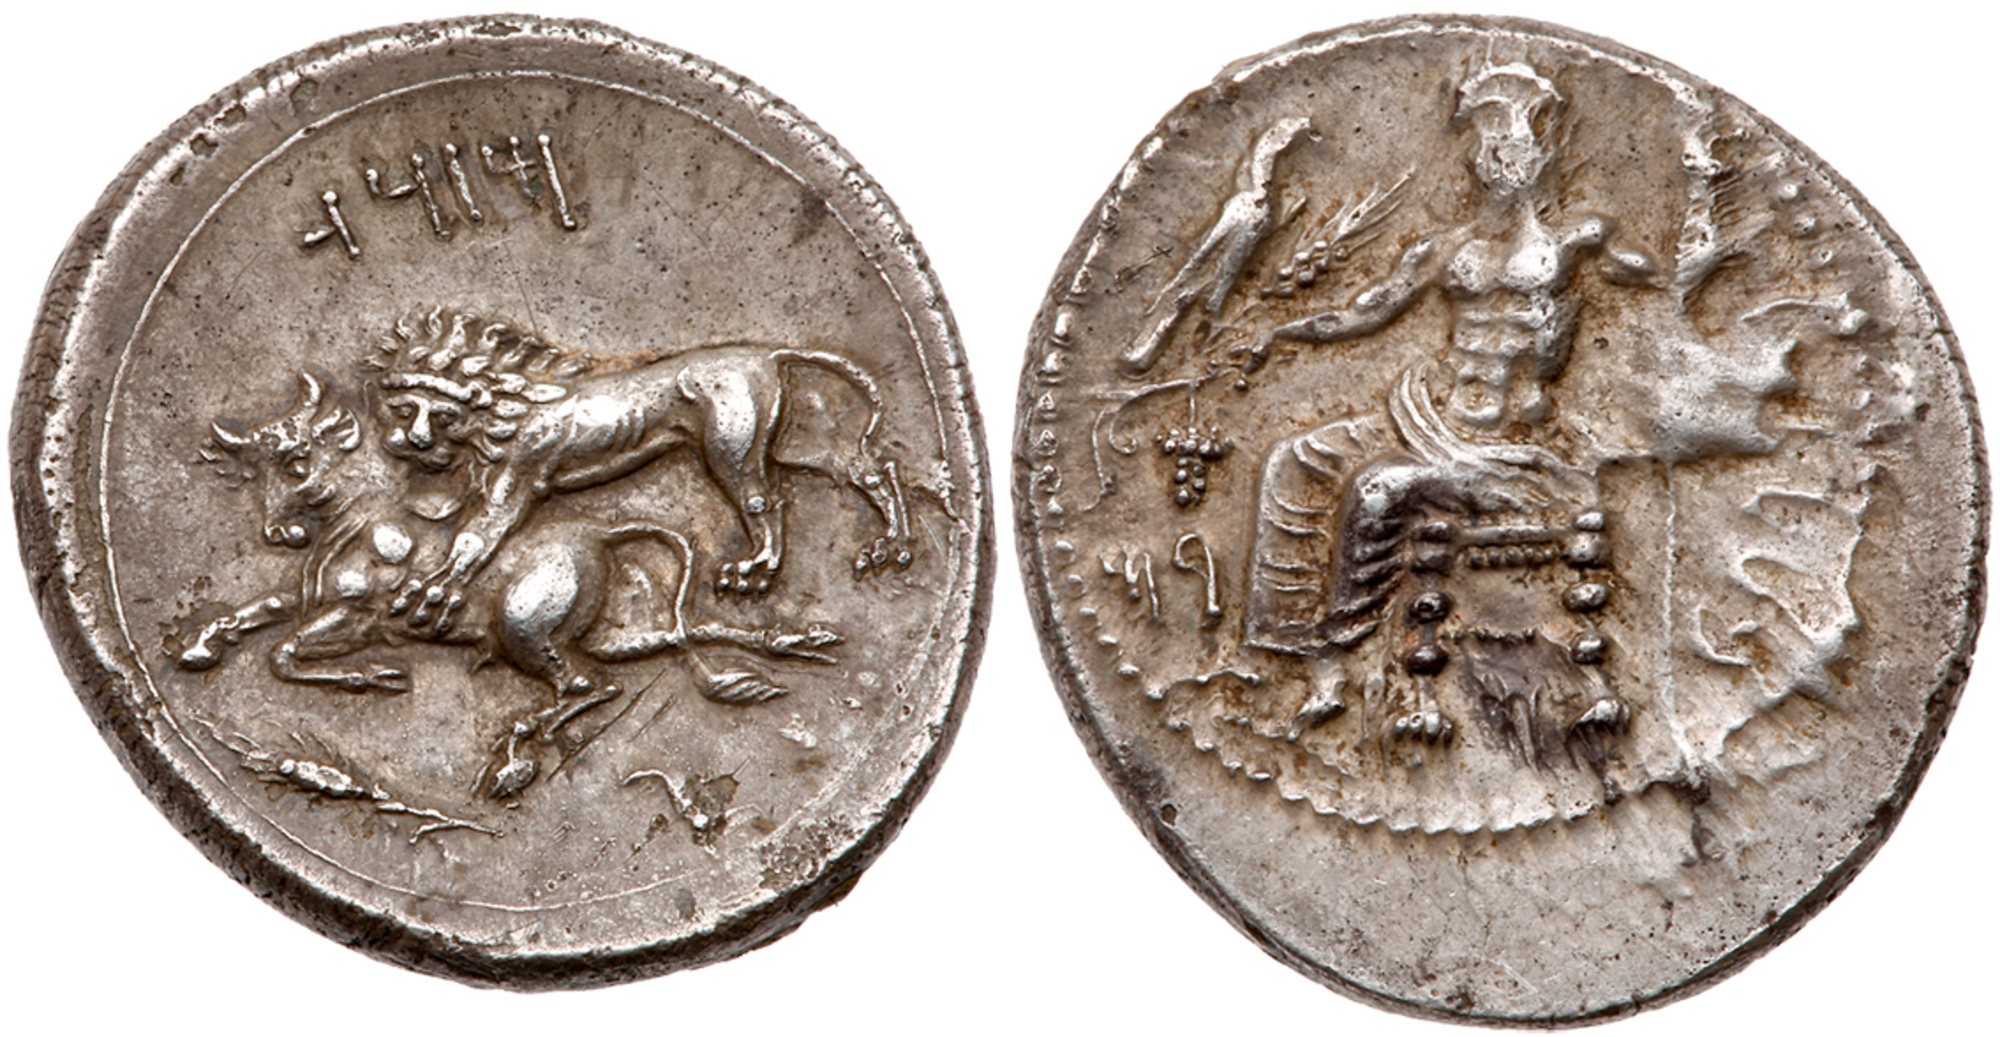 Cilicia, Tarsos. Mazaios. Silver Stater (10.76 g), Satrap of Cilicia, 361/0-334 BC. VF